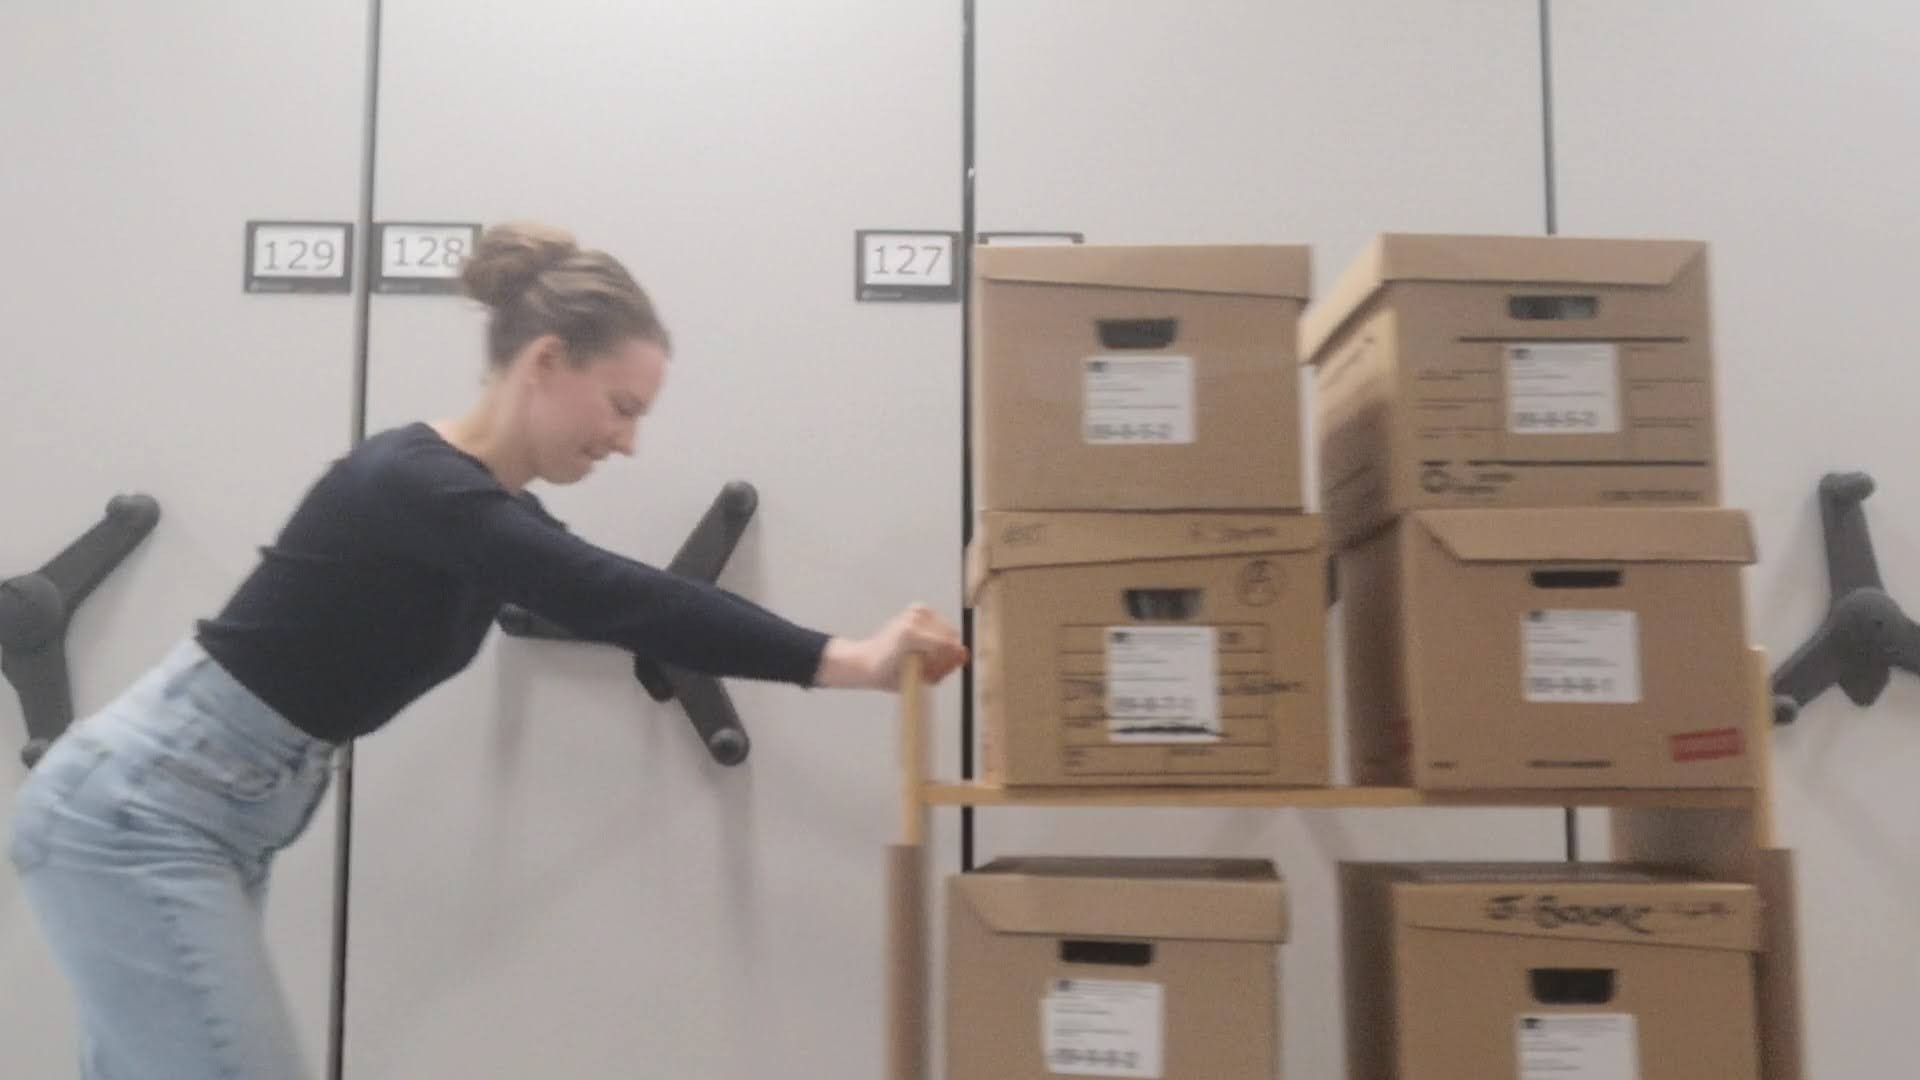 Kira Vandermeulen pushes boxes in the vault